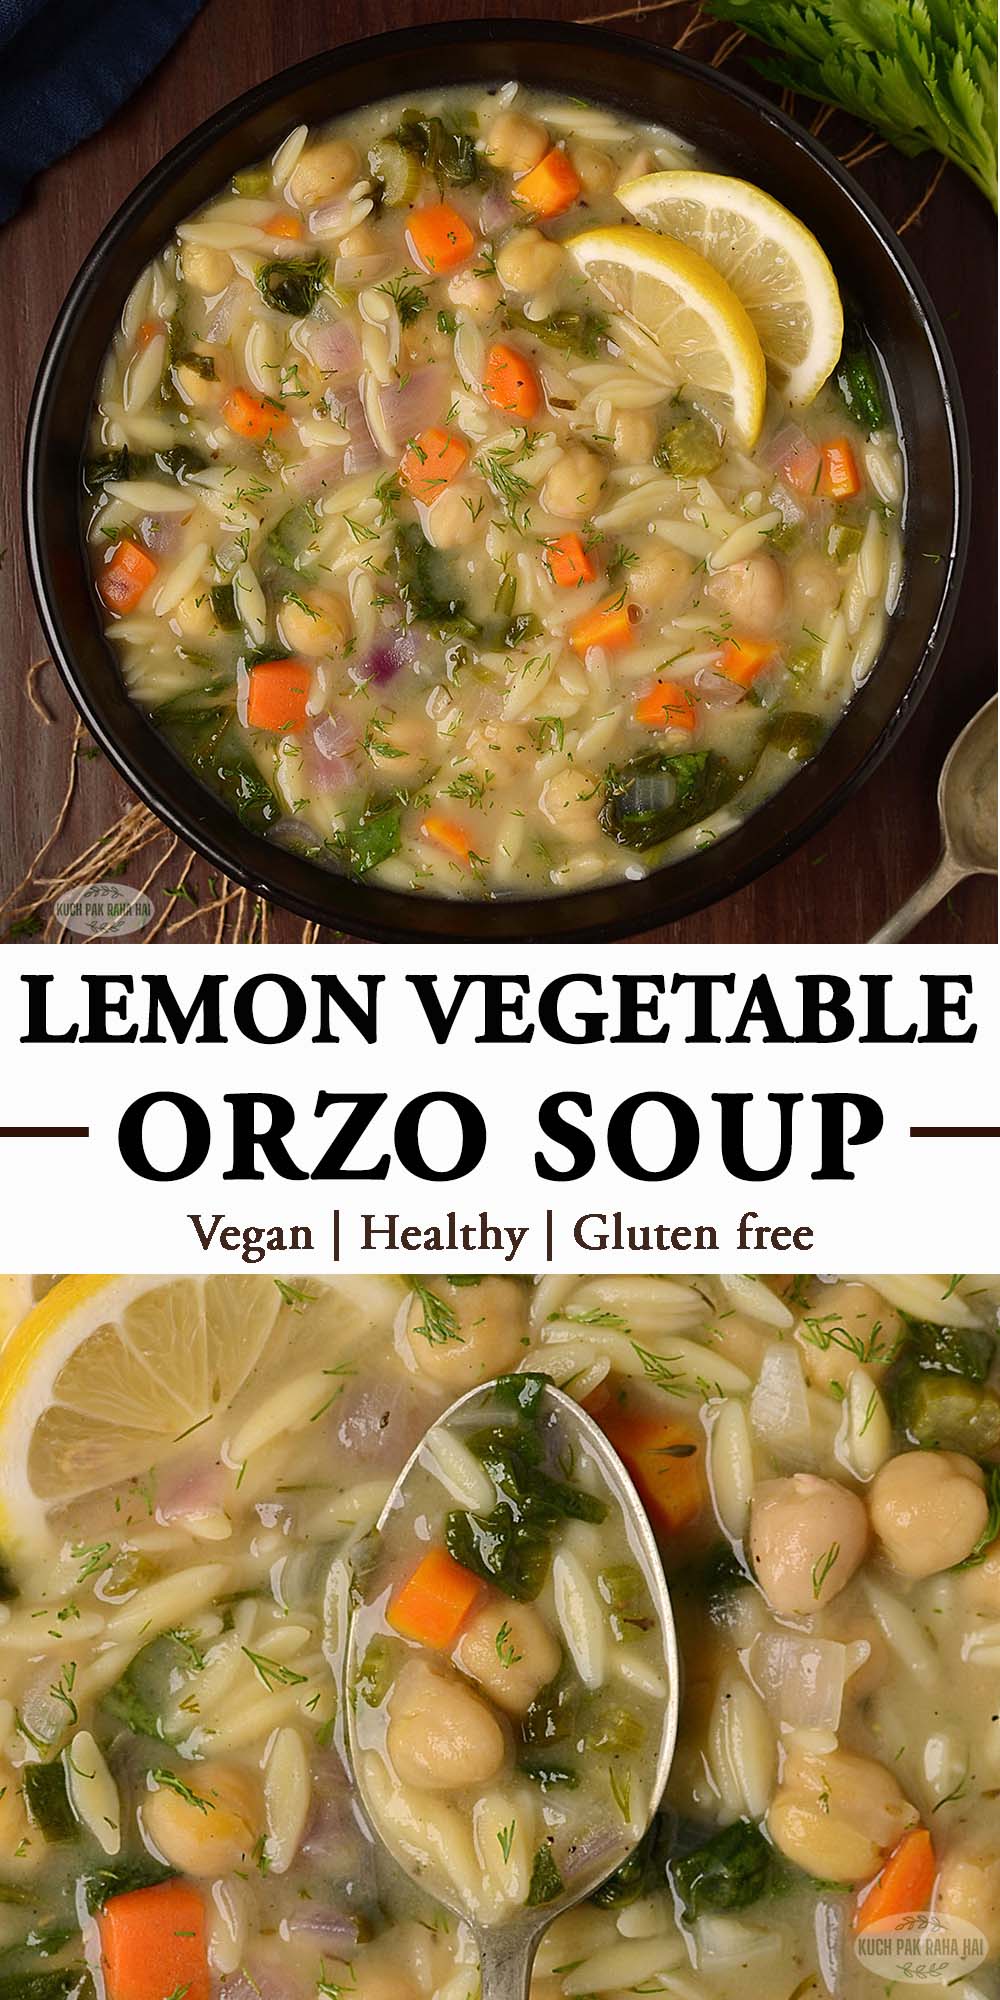 Orzo soup vegetarian recipe.